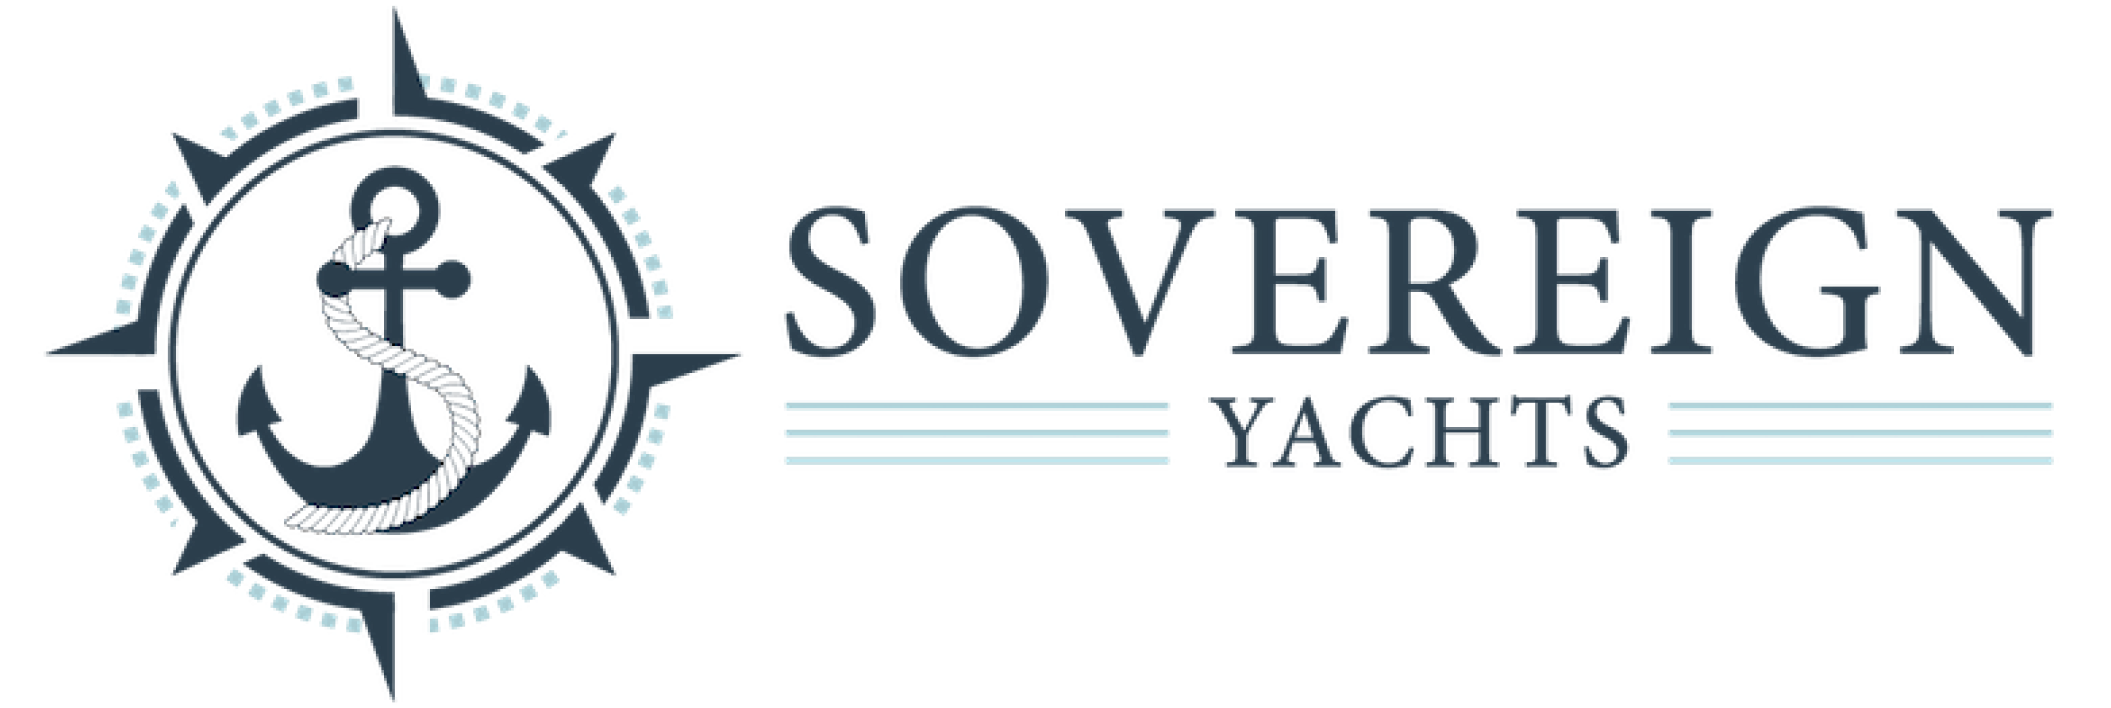 image of Sovy Yachts log